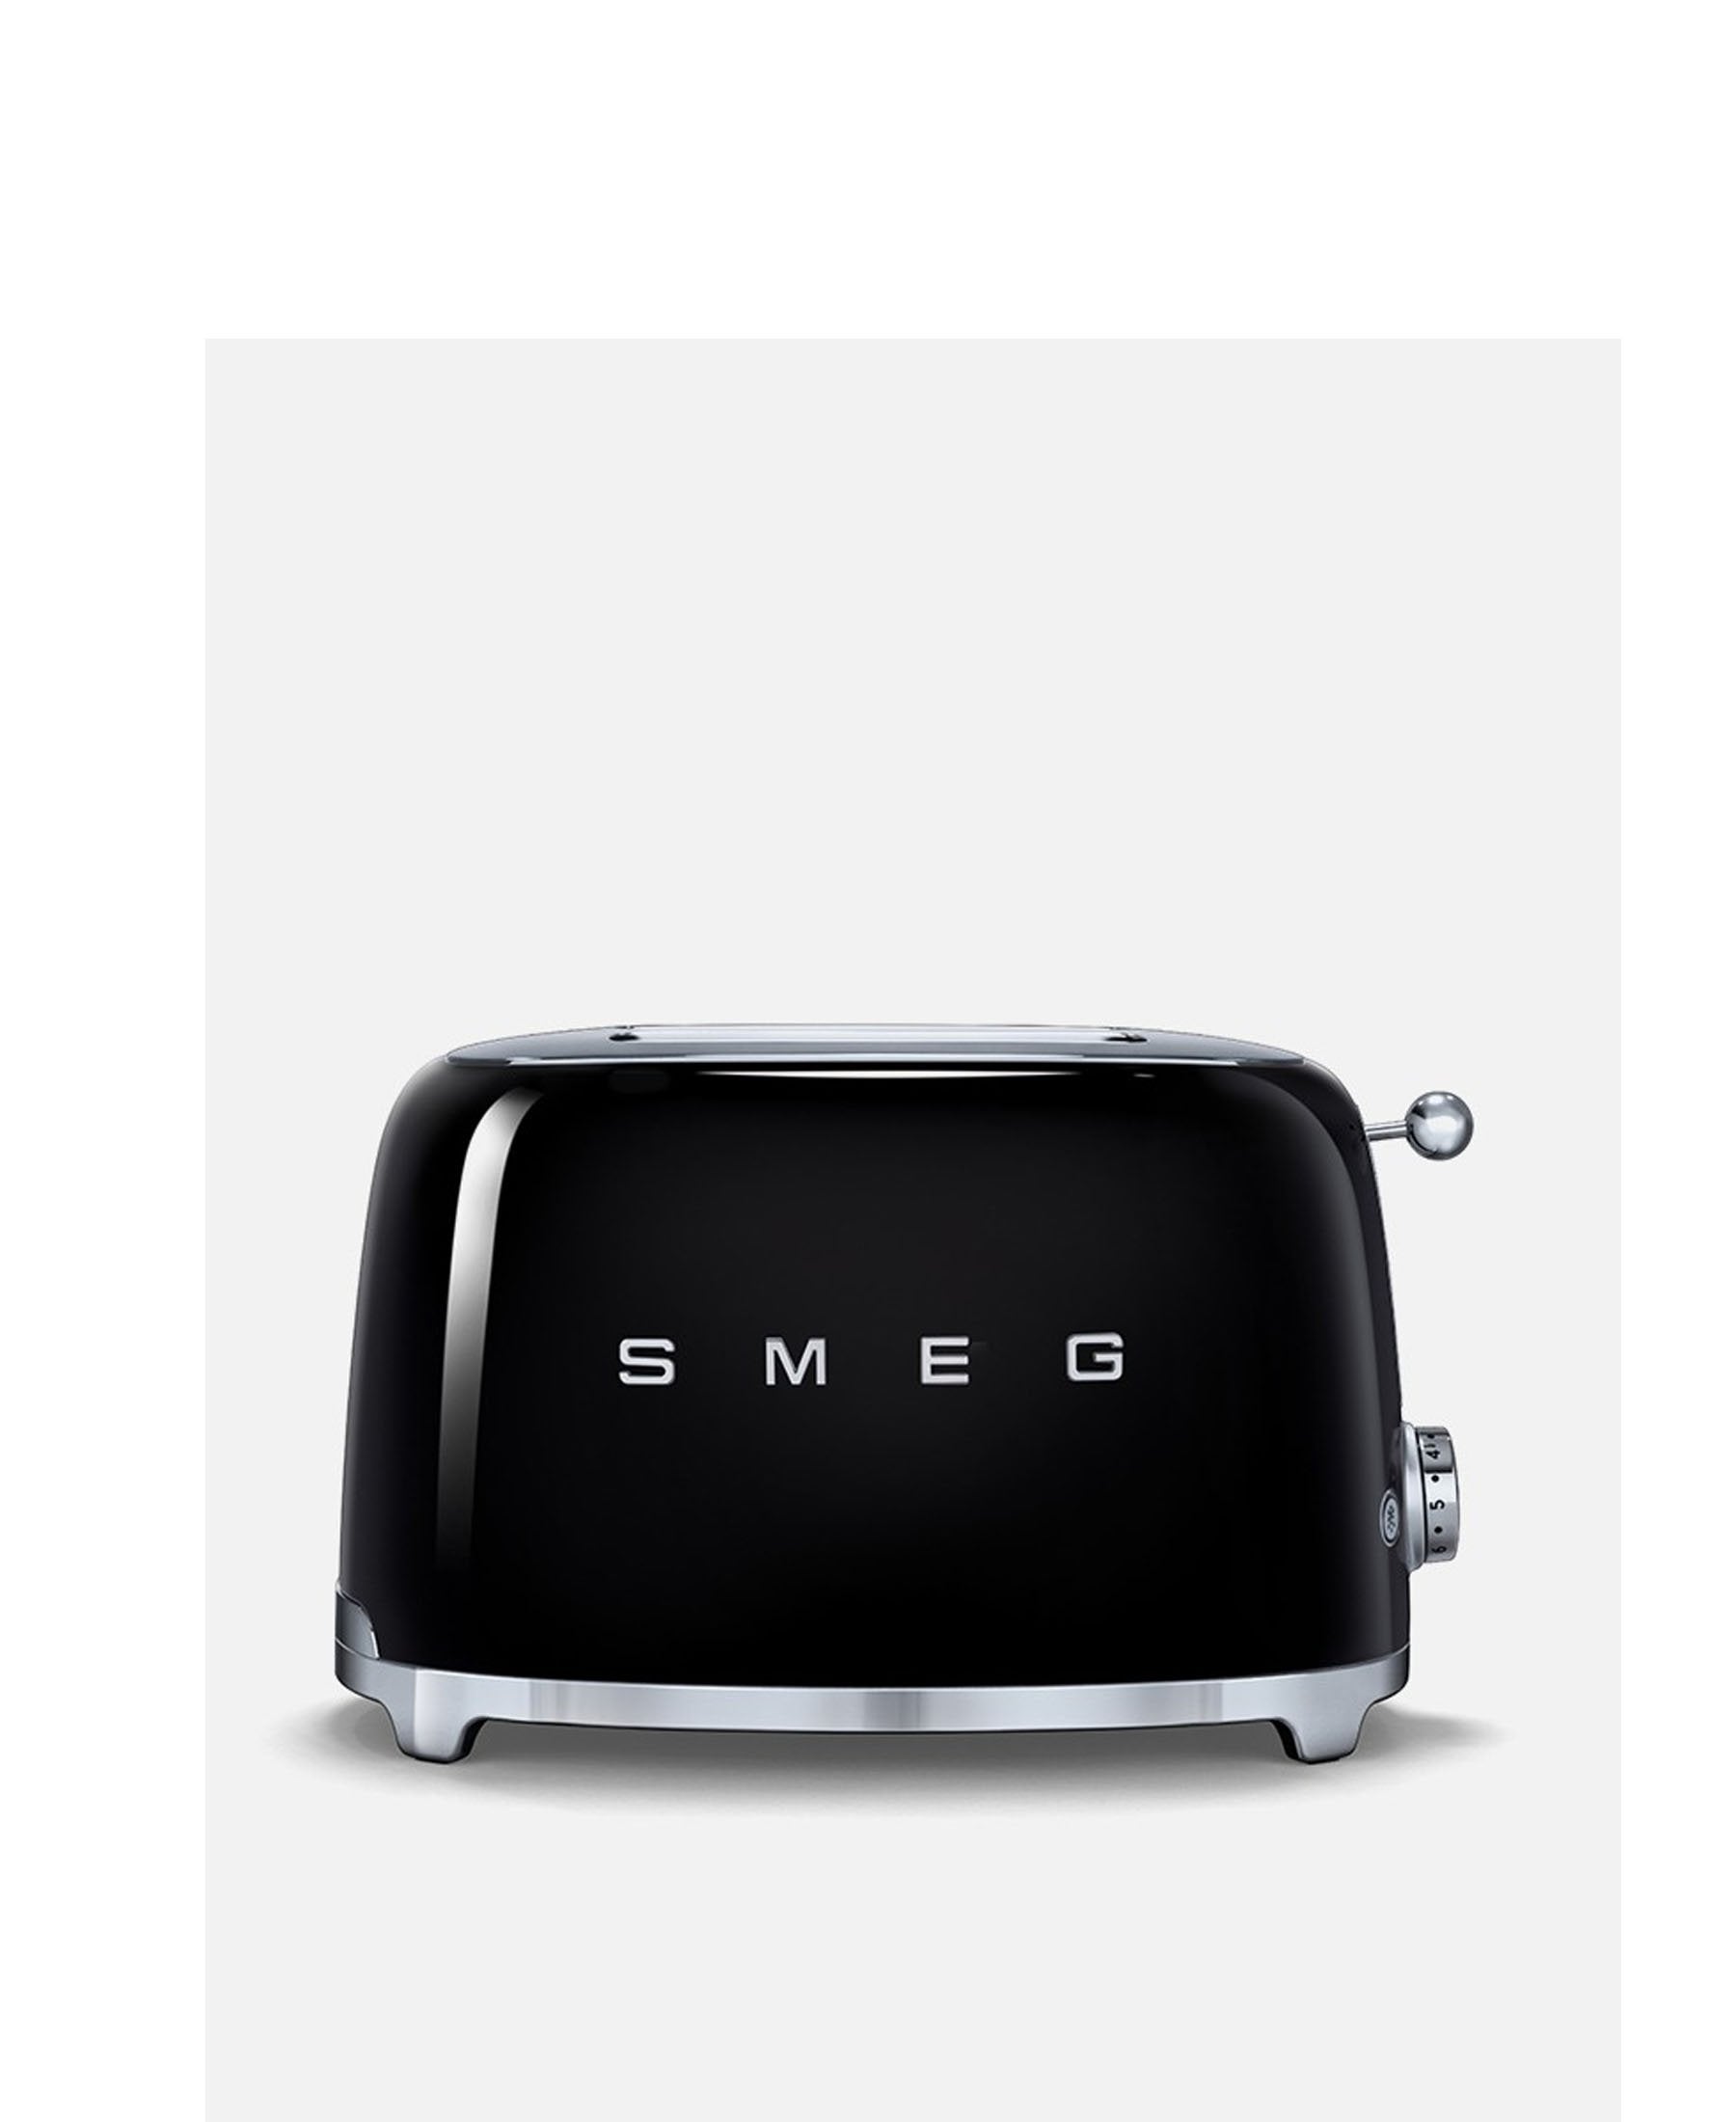 50's Retro 2-Slice Toaster - Black, SMEG